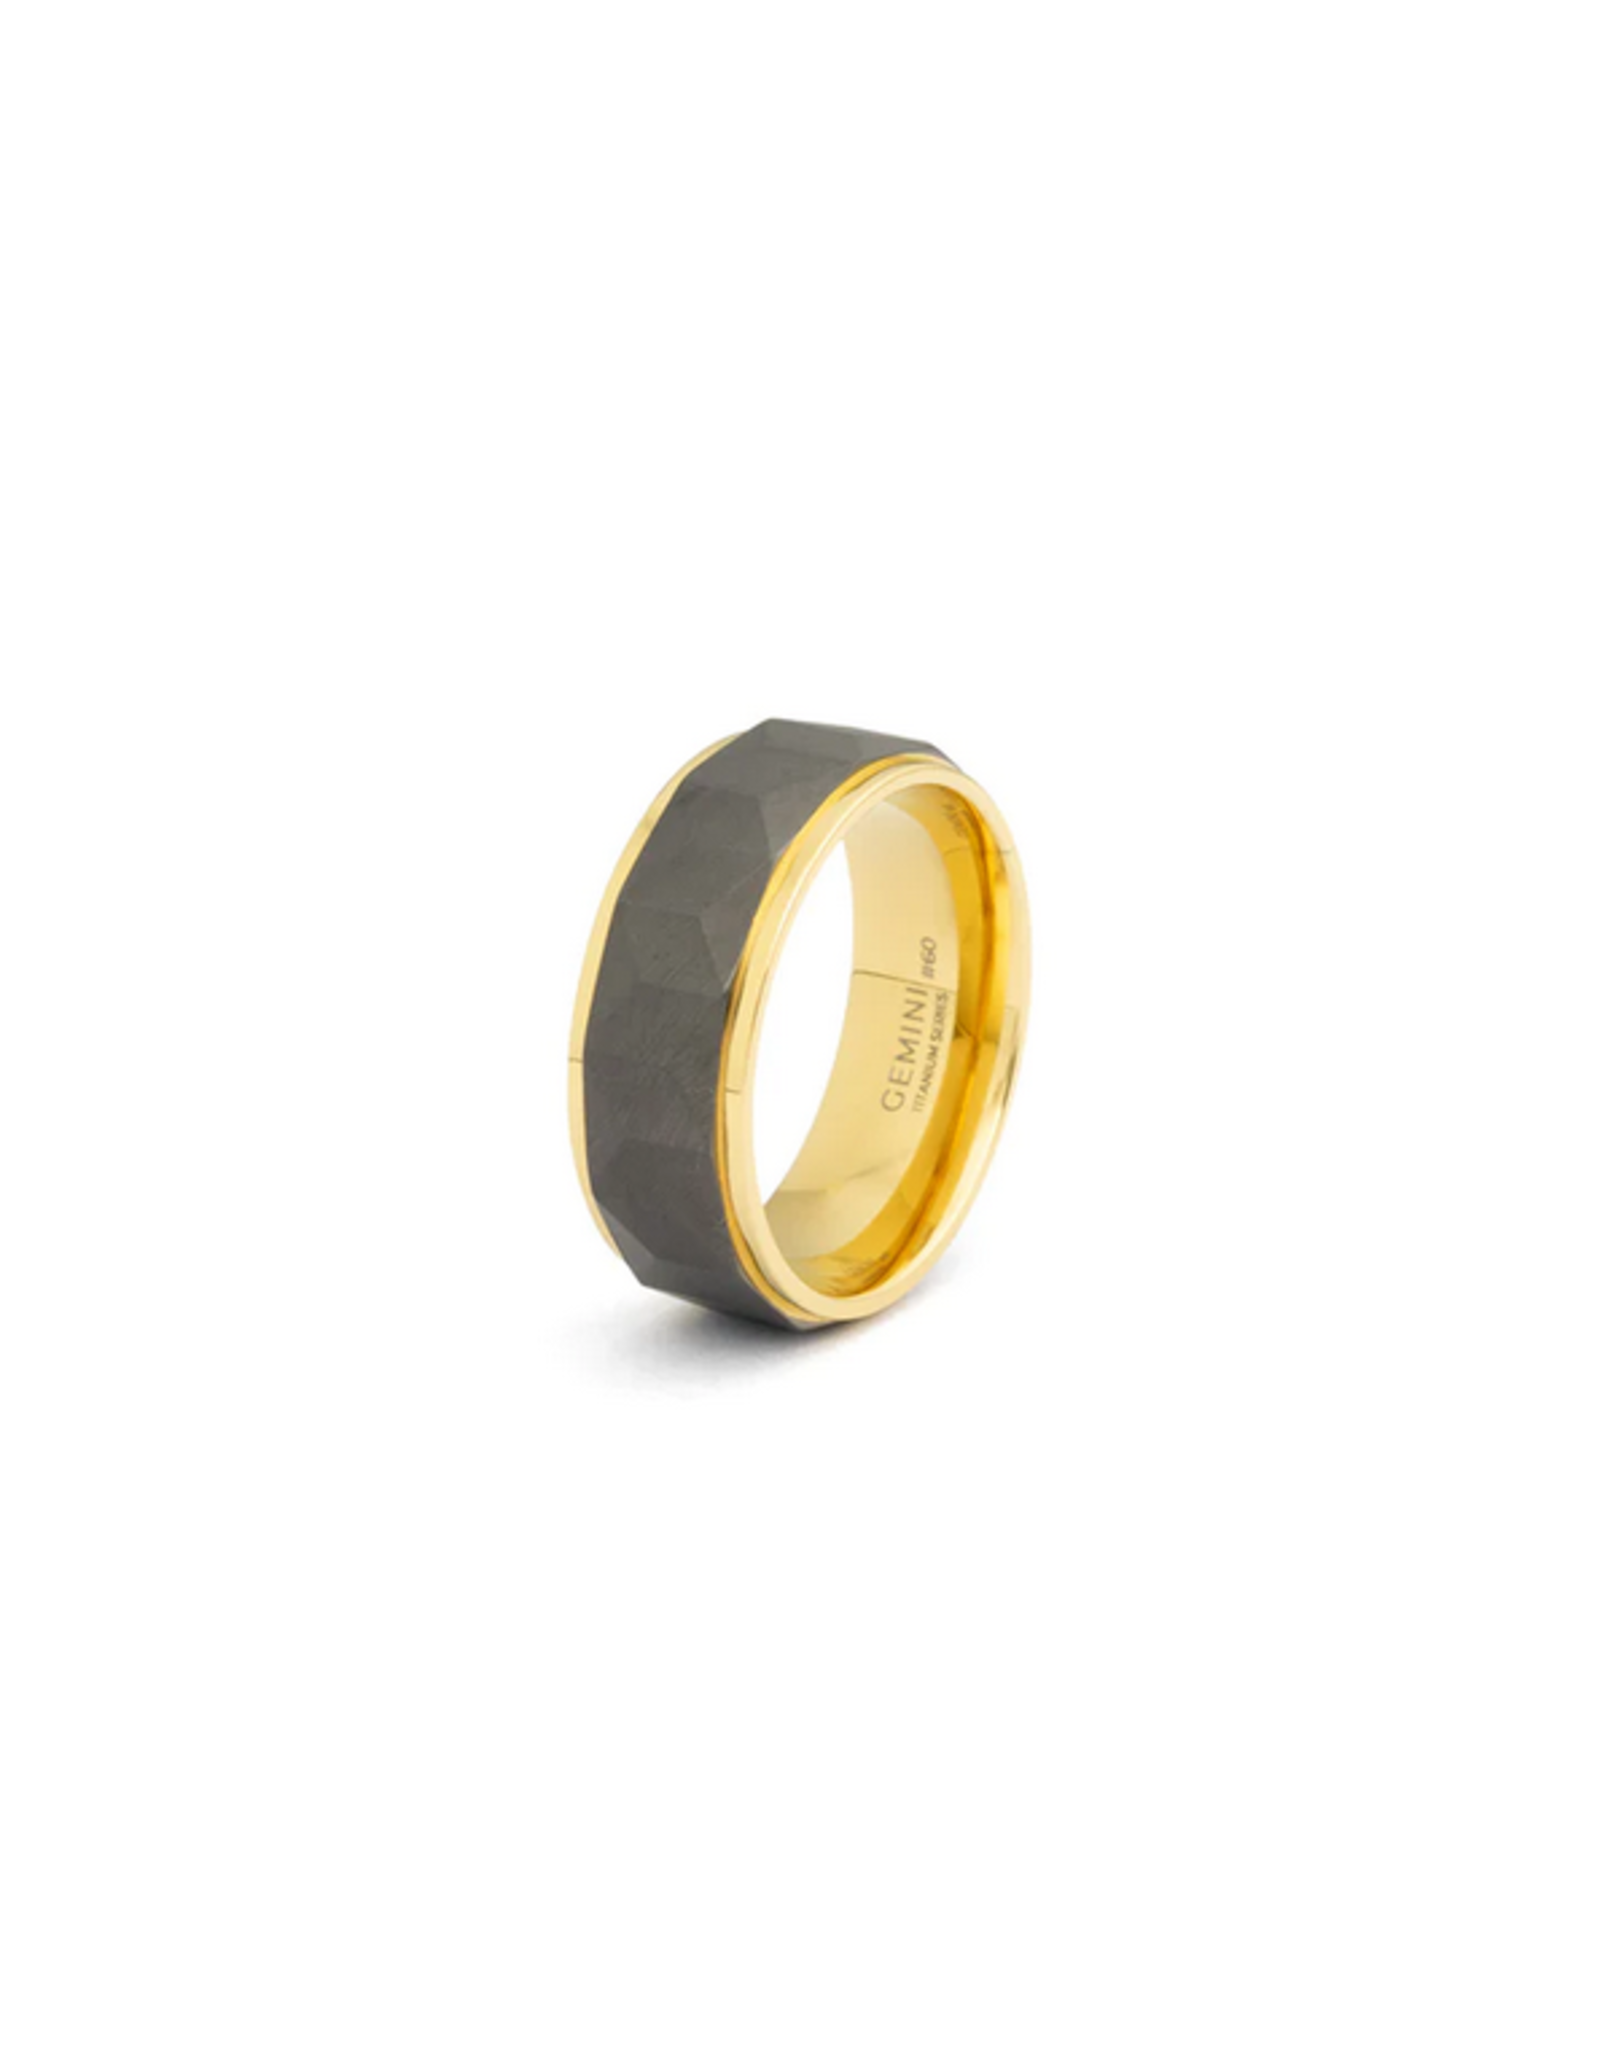 gemini-gold-and-black-timor-ring